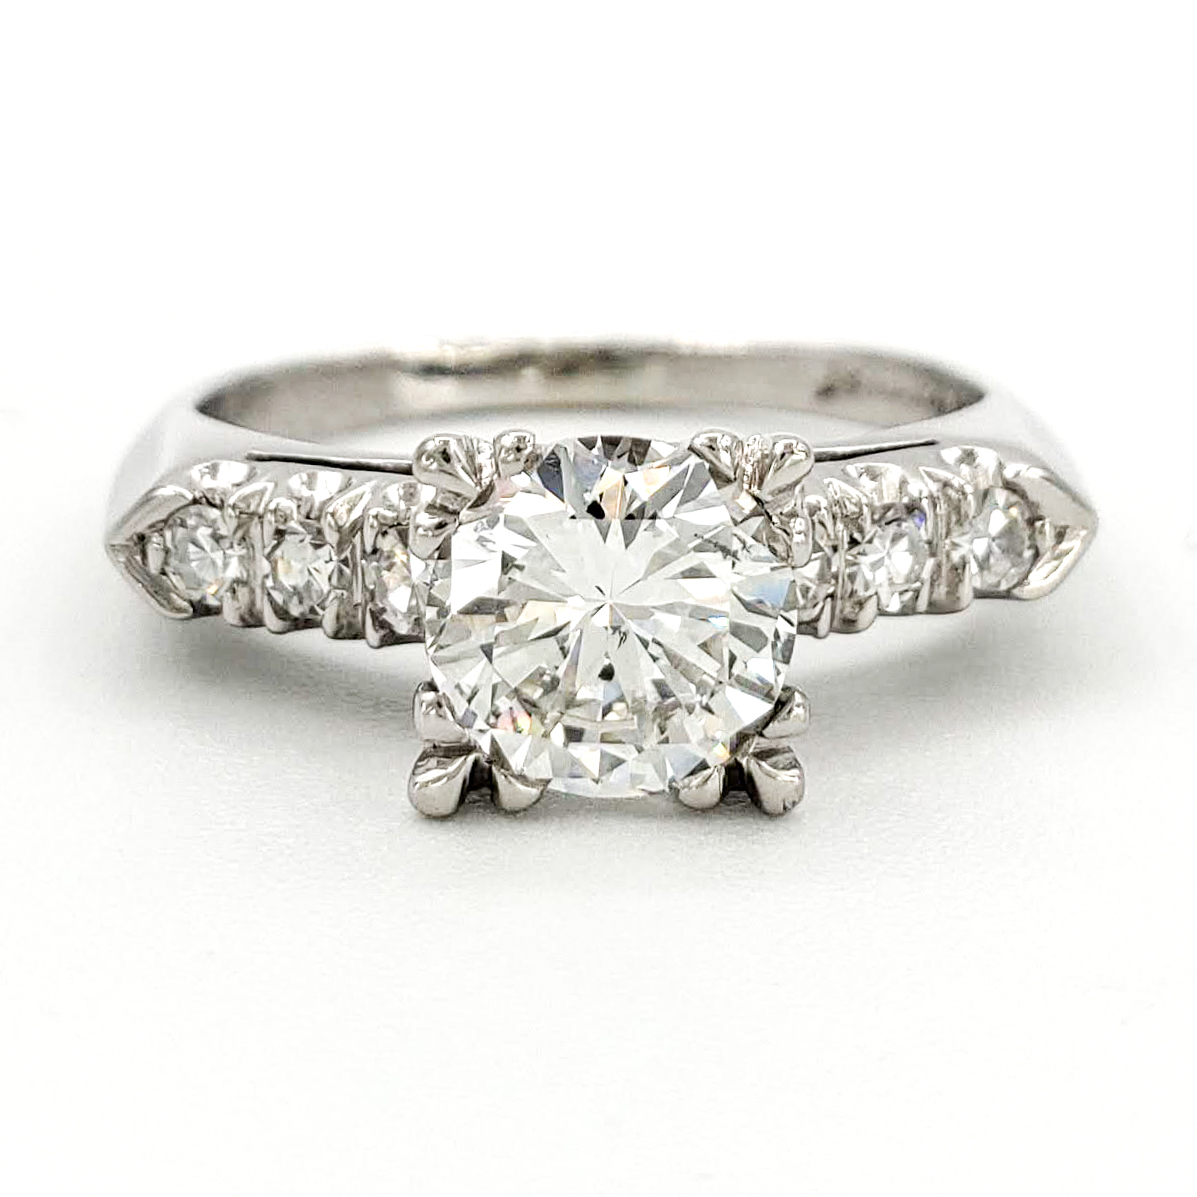 vintage-platinum-engagement-ring-with-1-01-carat-round-brilliant-cut-diamond-egl-g-si1